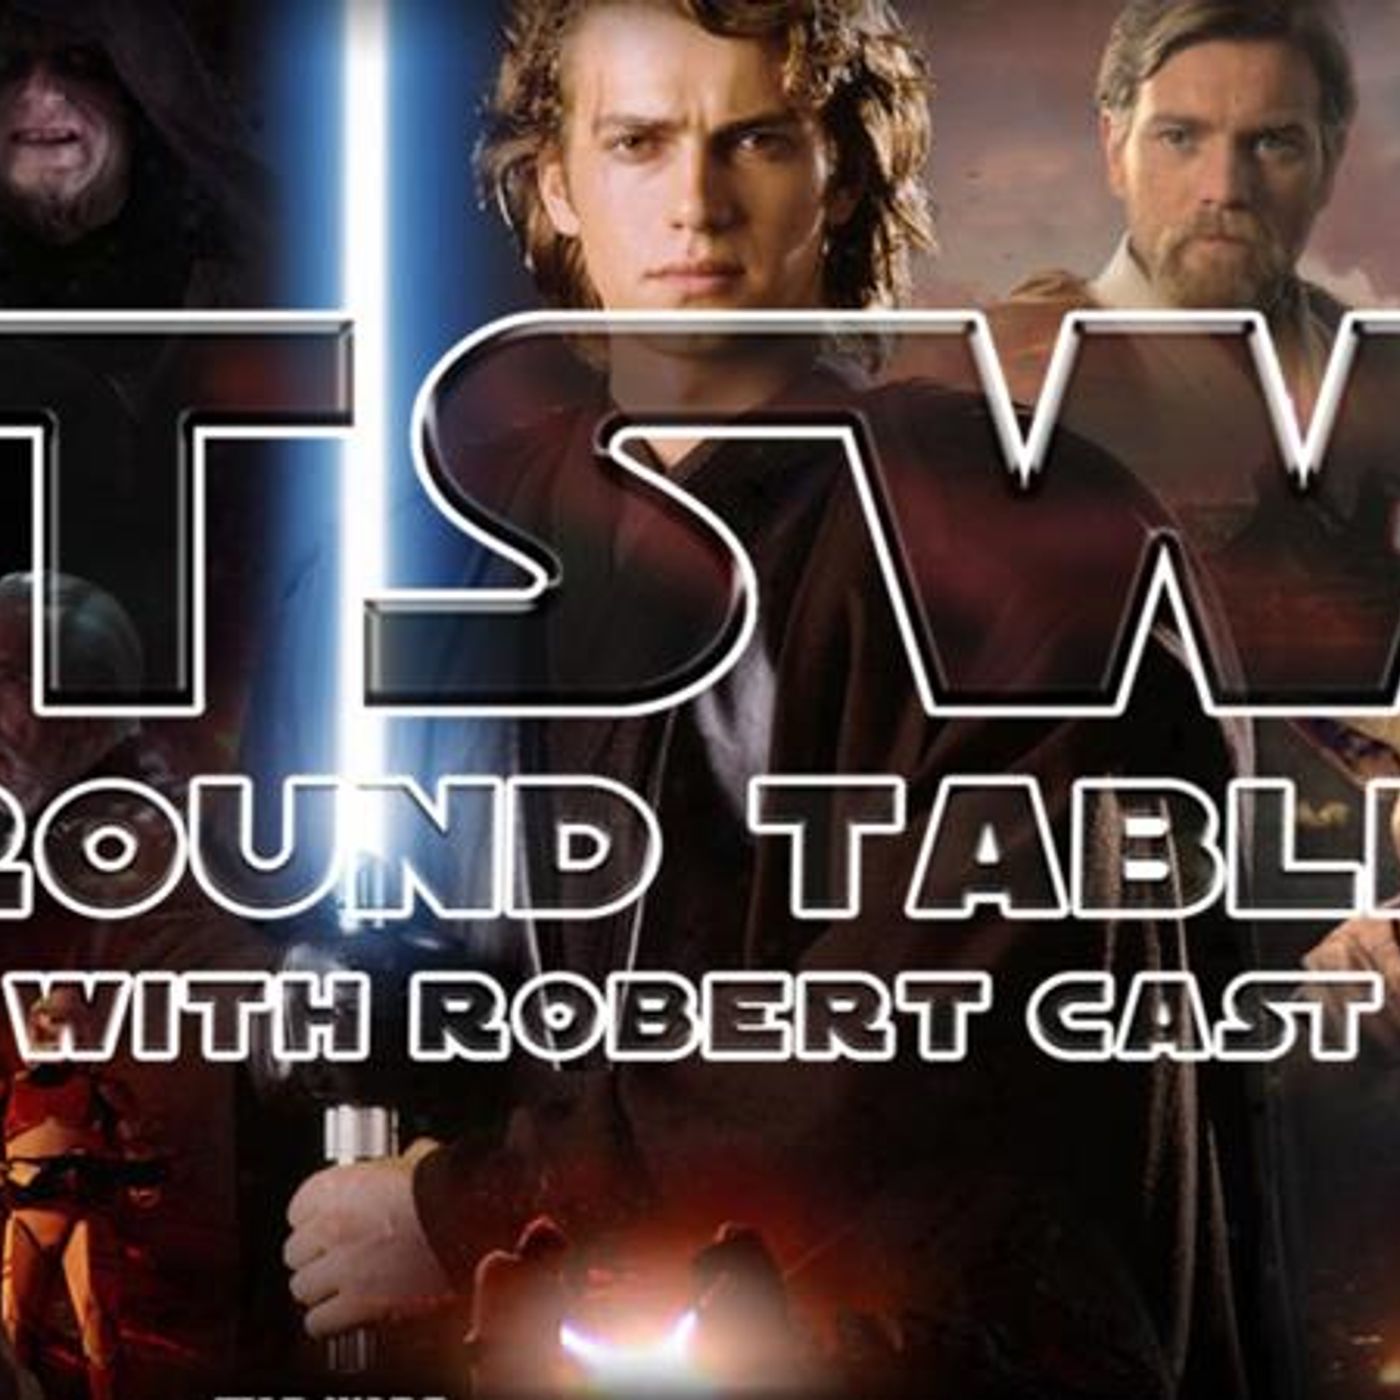 TSW Roundtable: Episode III ”Revenge Of The Sith” Retrospective